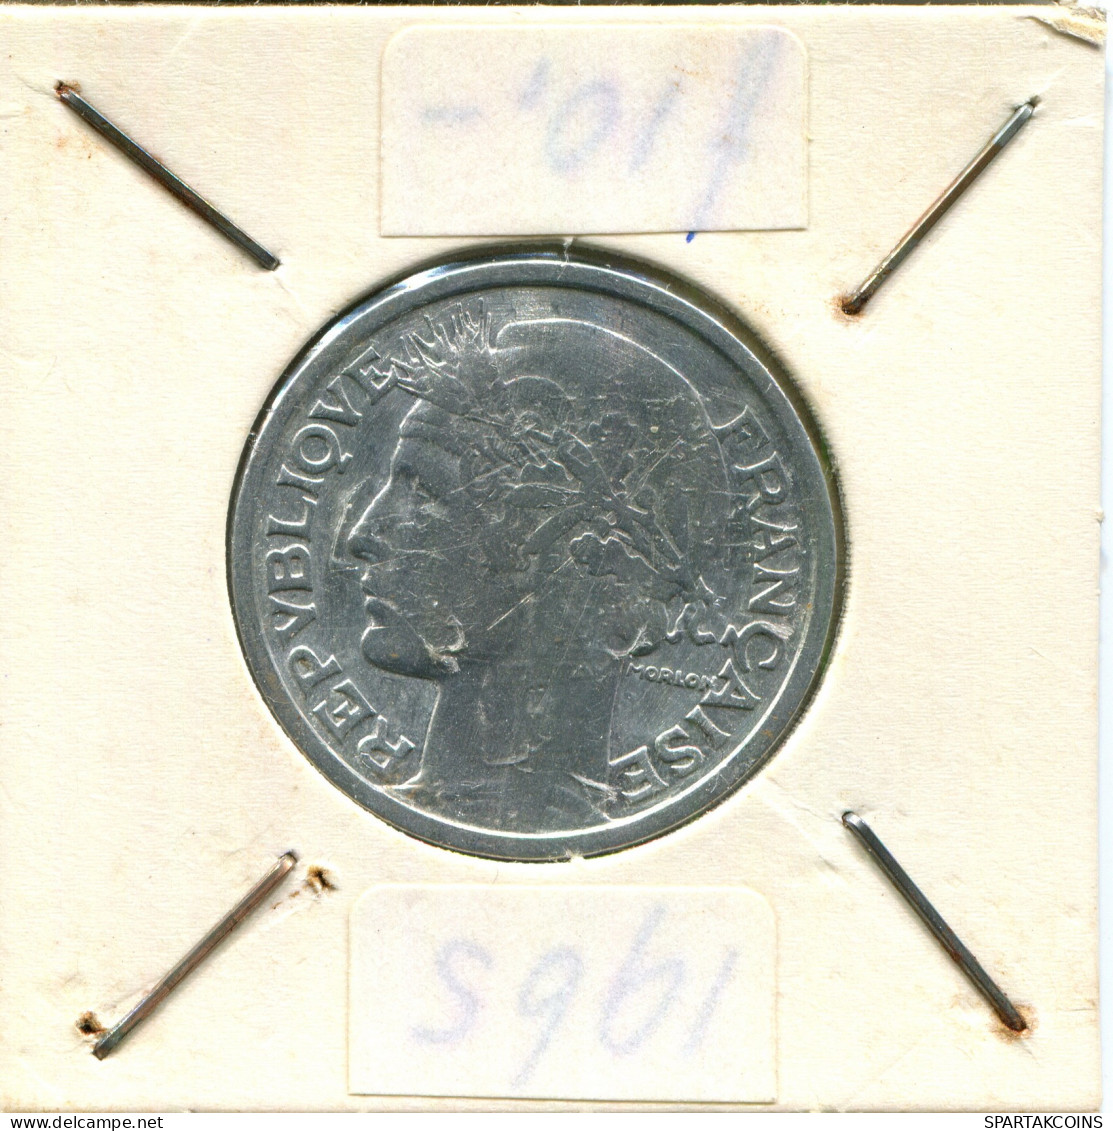 2 FRANCS 1947 FRANCIA FRANCE Moneda #AW376.E - 2 Francs